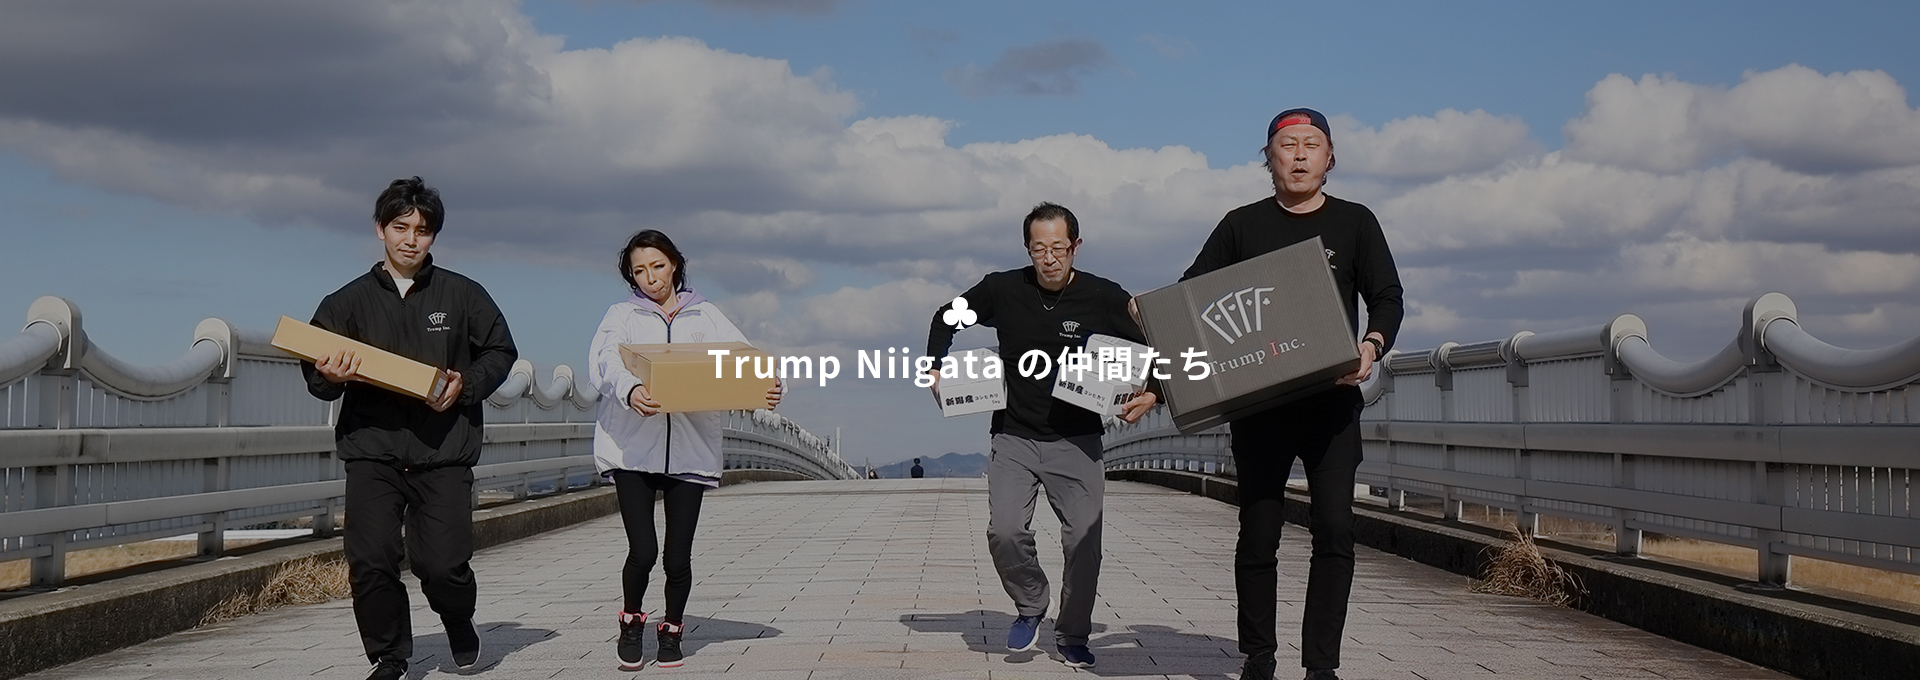 Trump Niigataの仲間たち